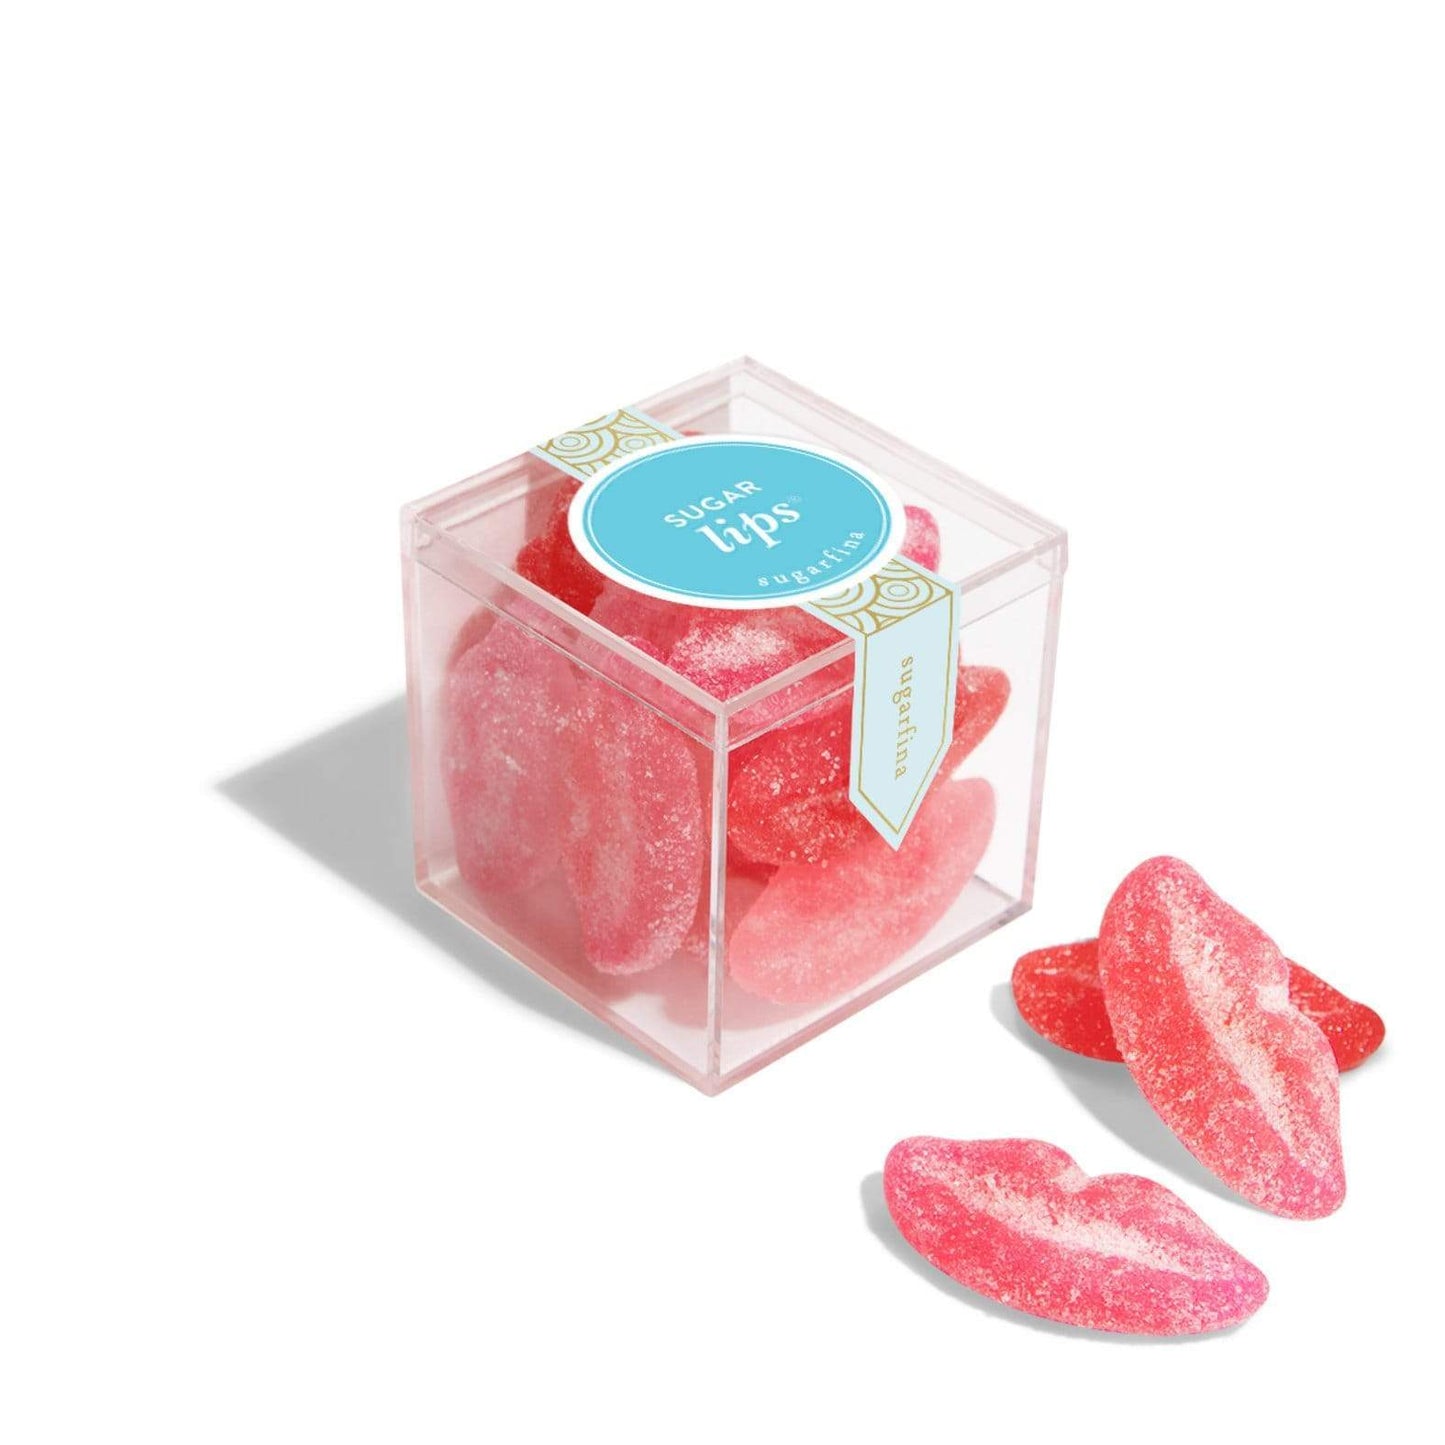 Luxe & Bloom - Sugarfina Sugar Lips Candy